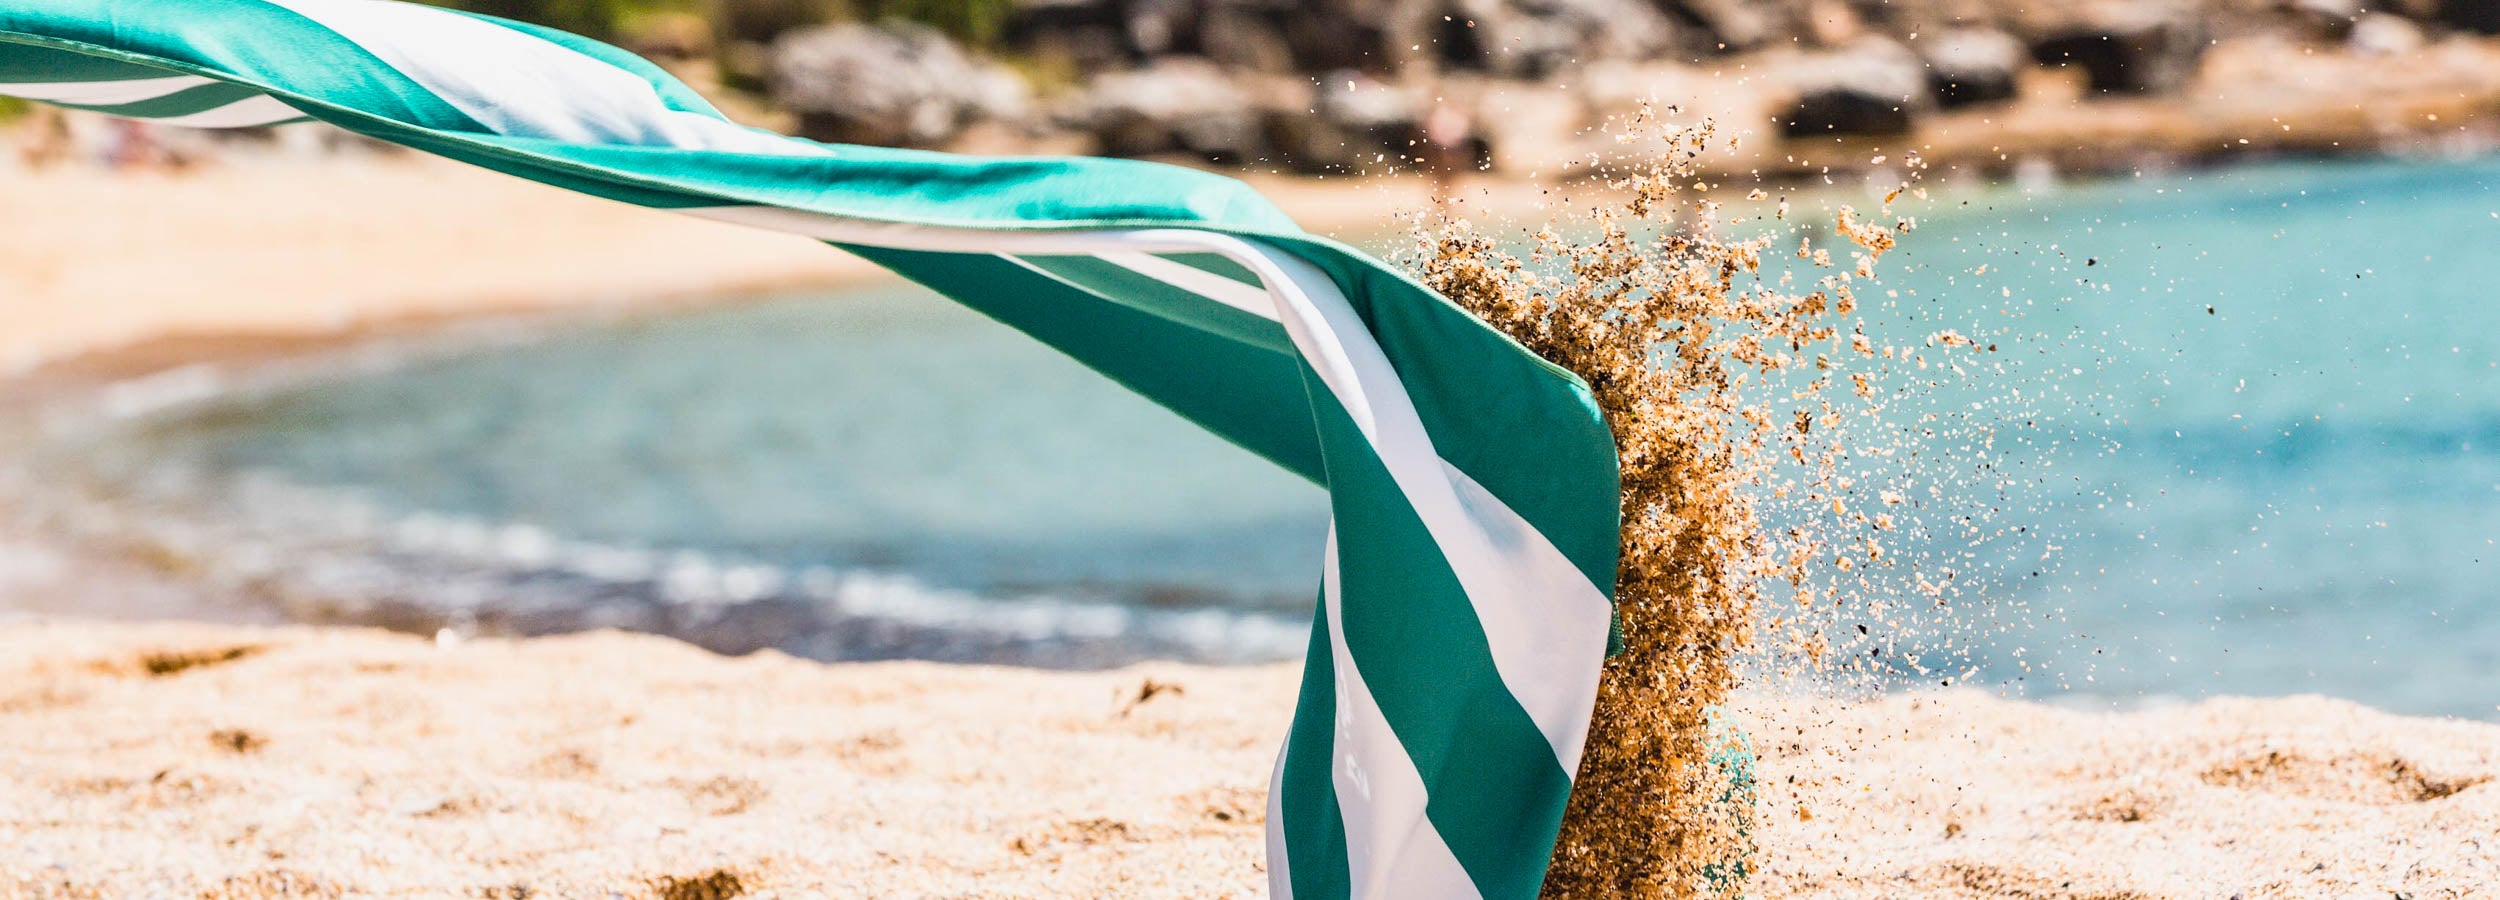 Why Rockycay Sand Free Beach Towels Are Great | ROCKYCAY